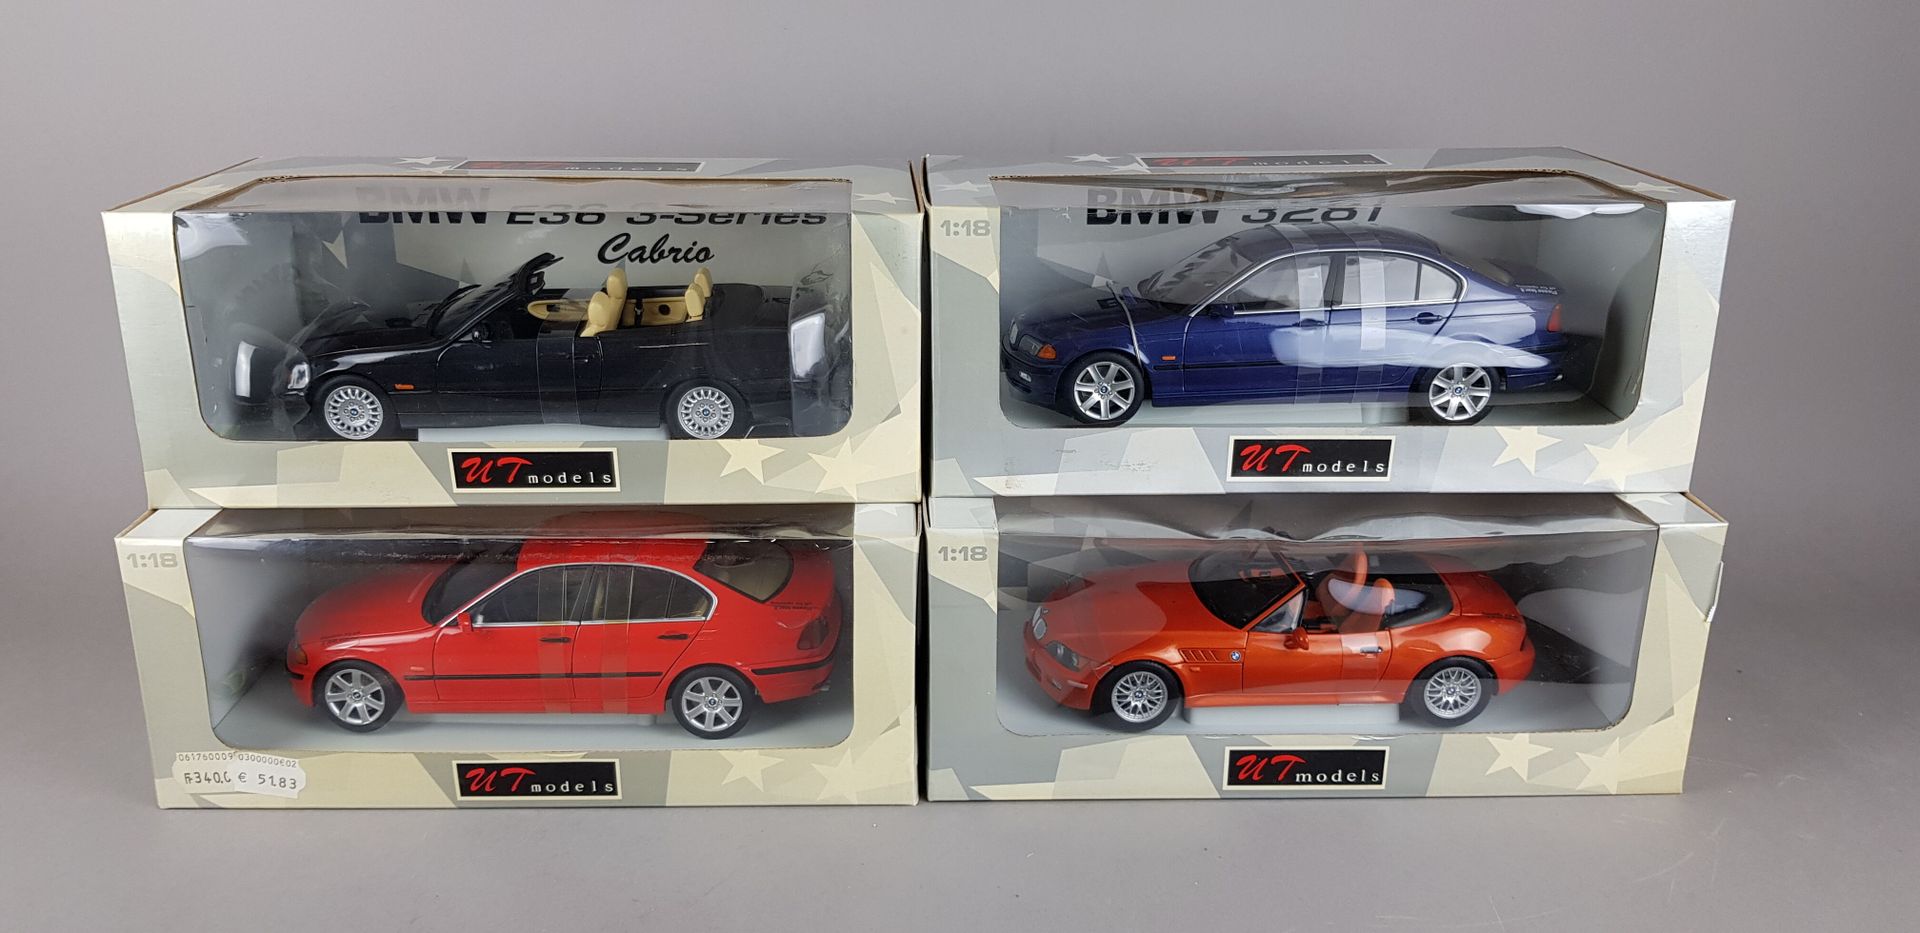 Null UT MODELS - QUATRE BMW échelle 1/18 :

2x 328 i

1x Z3 Roadster 2.8

1x E36&hellip;